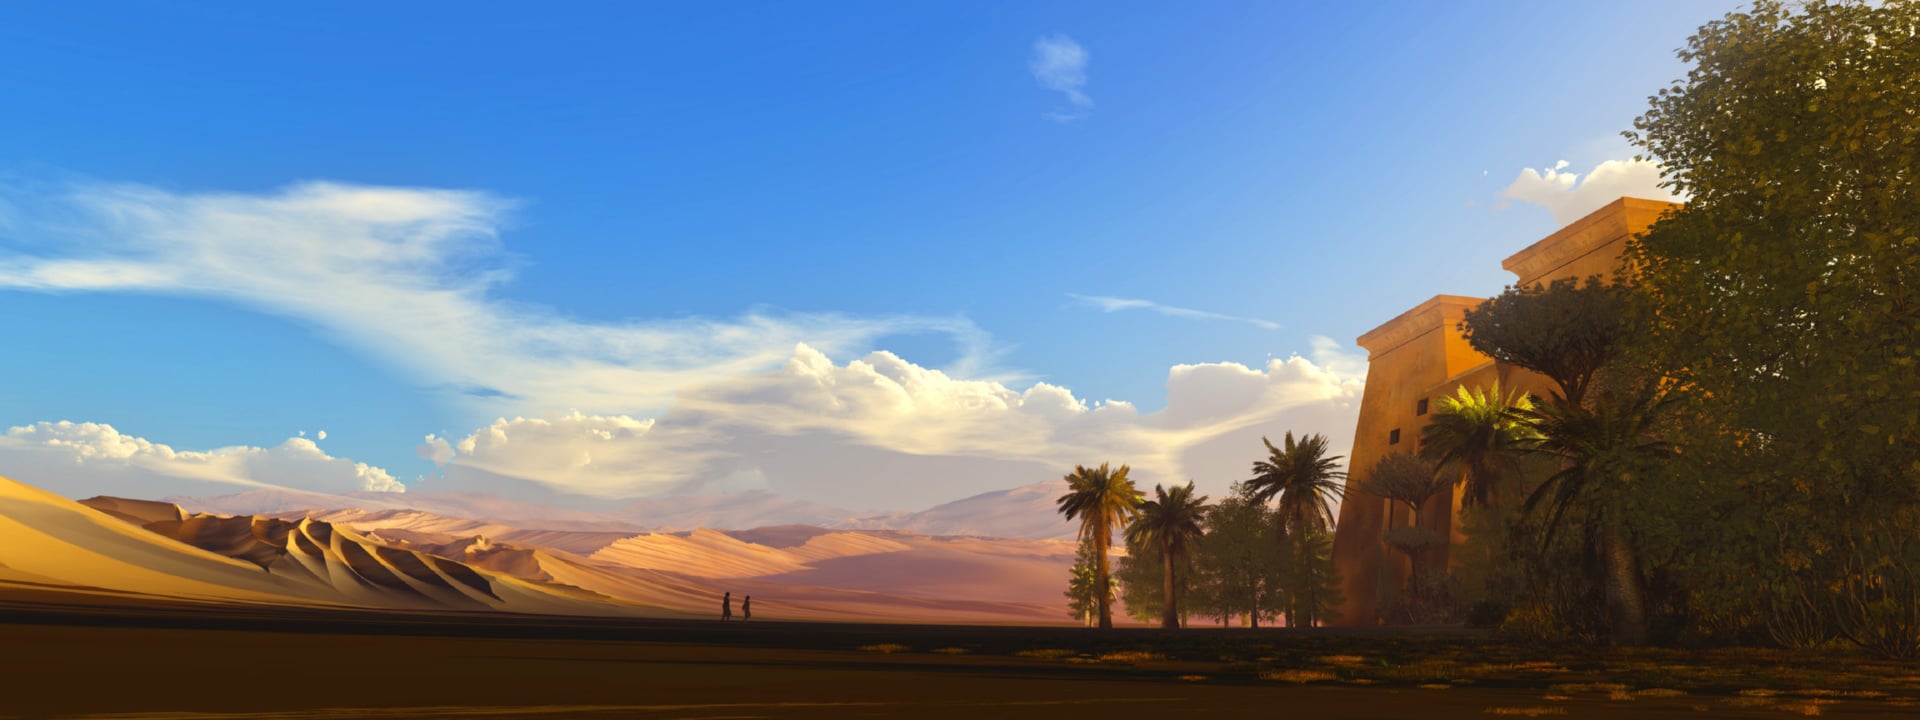 Digital Art Desert at 1152 x 864 size wallpapers HD quality